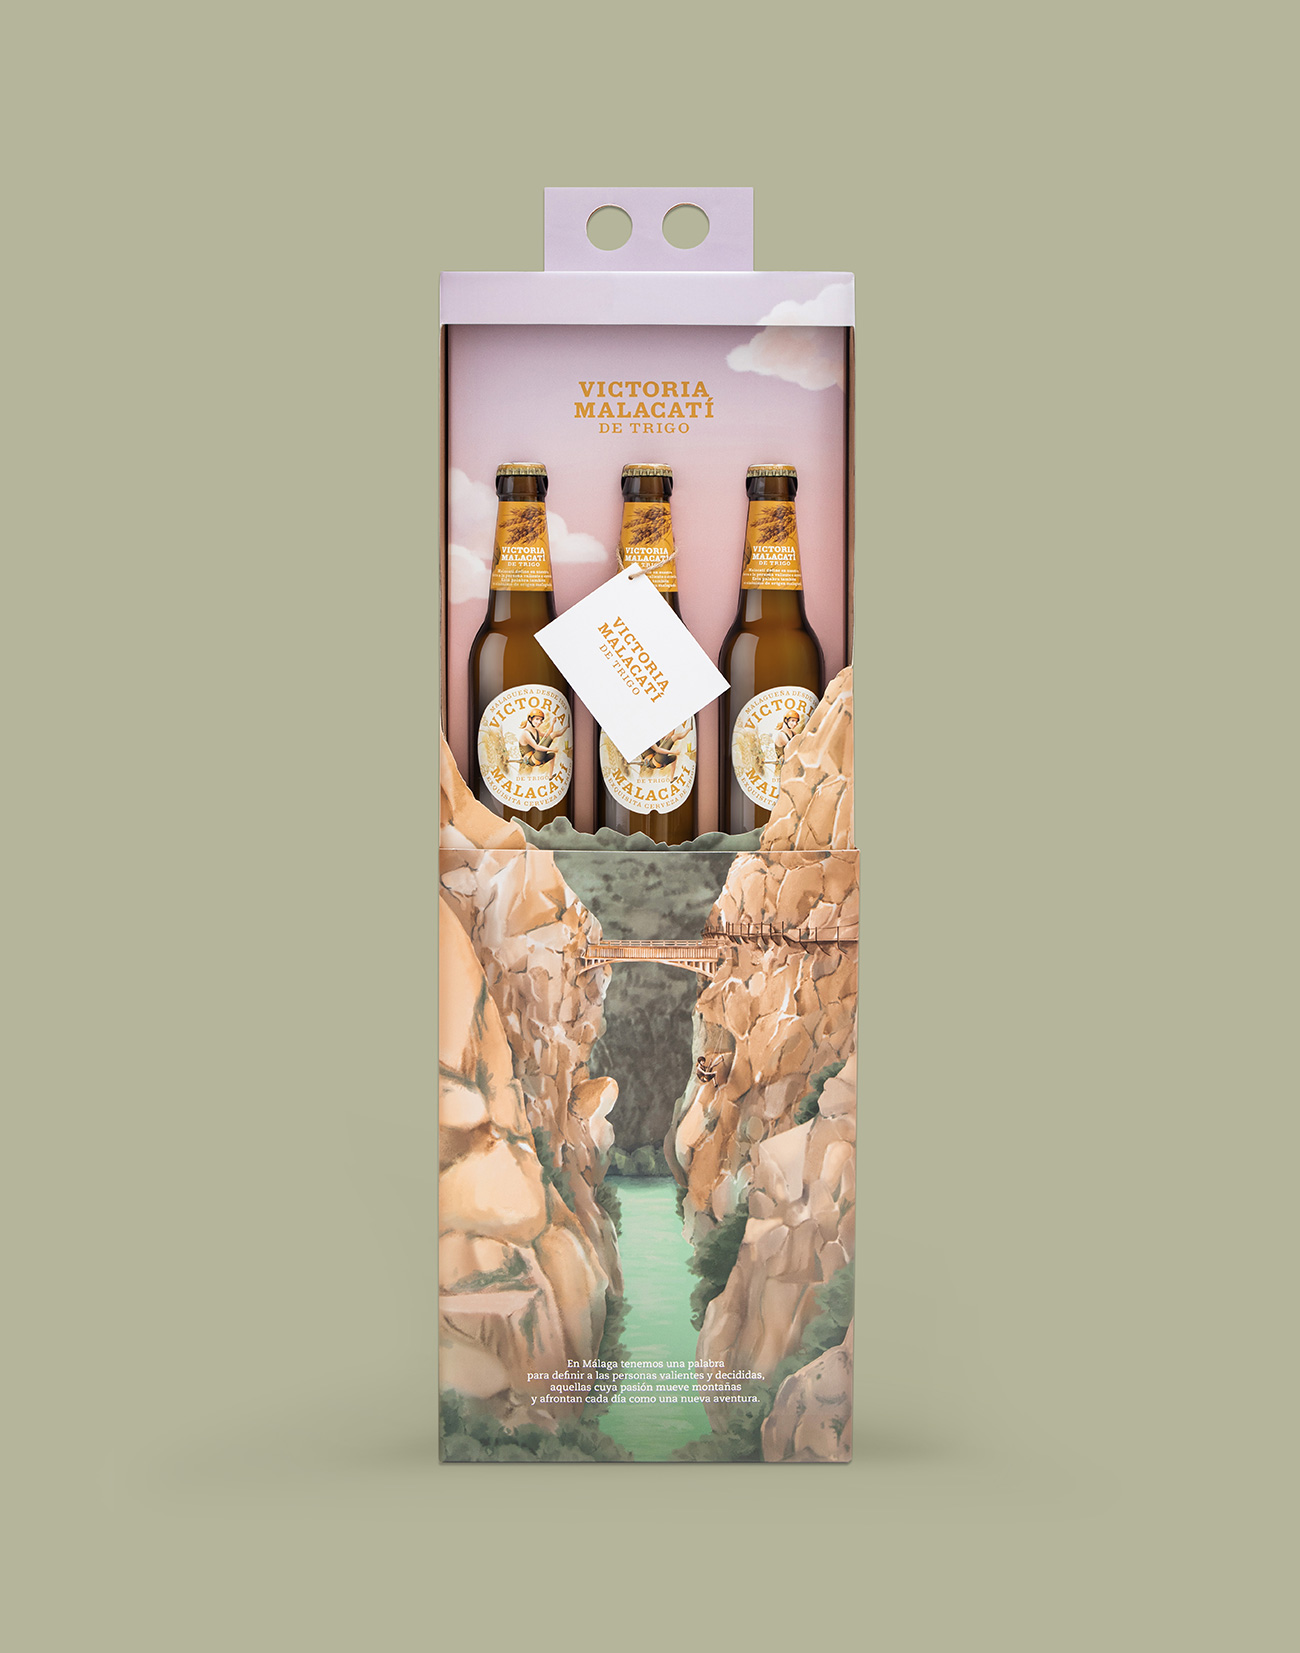 Victoria-packaging-malacati